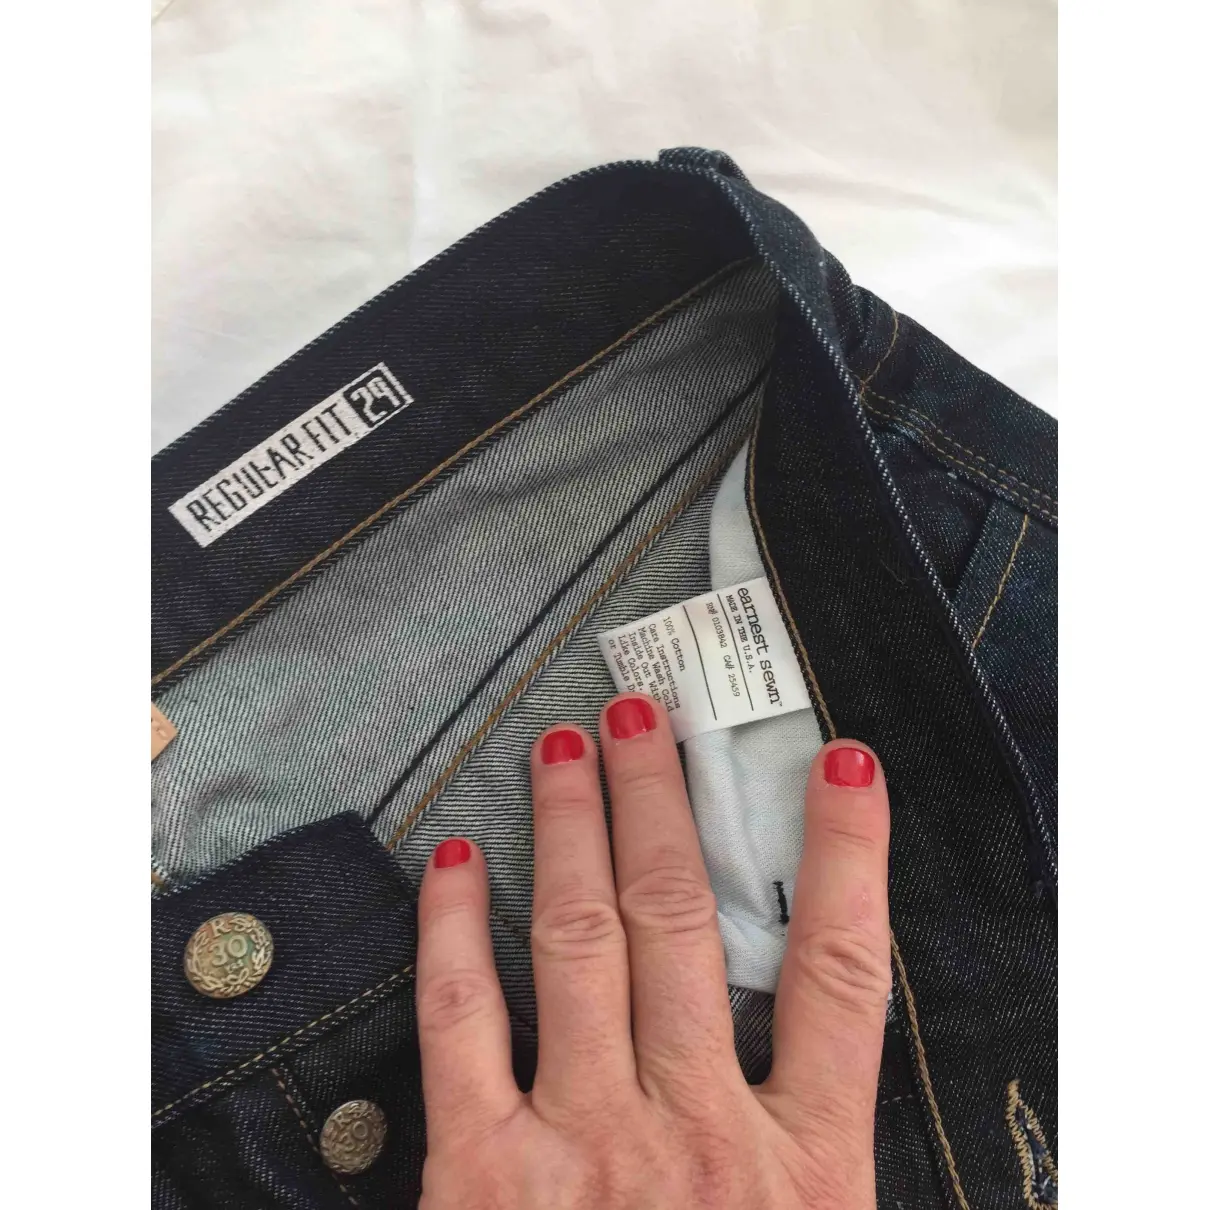 Ernest Sewn Boyfriend jeans for sale